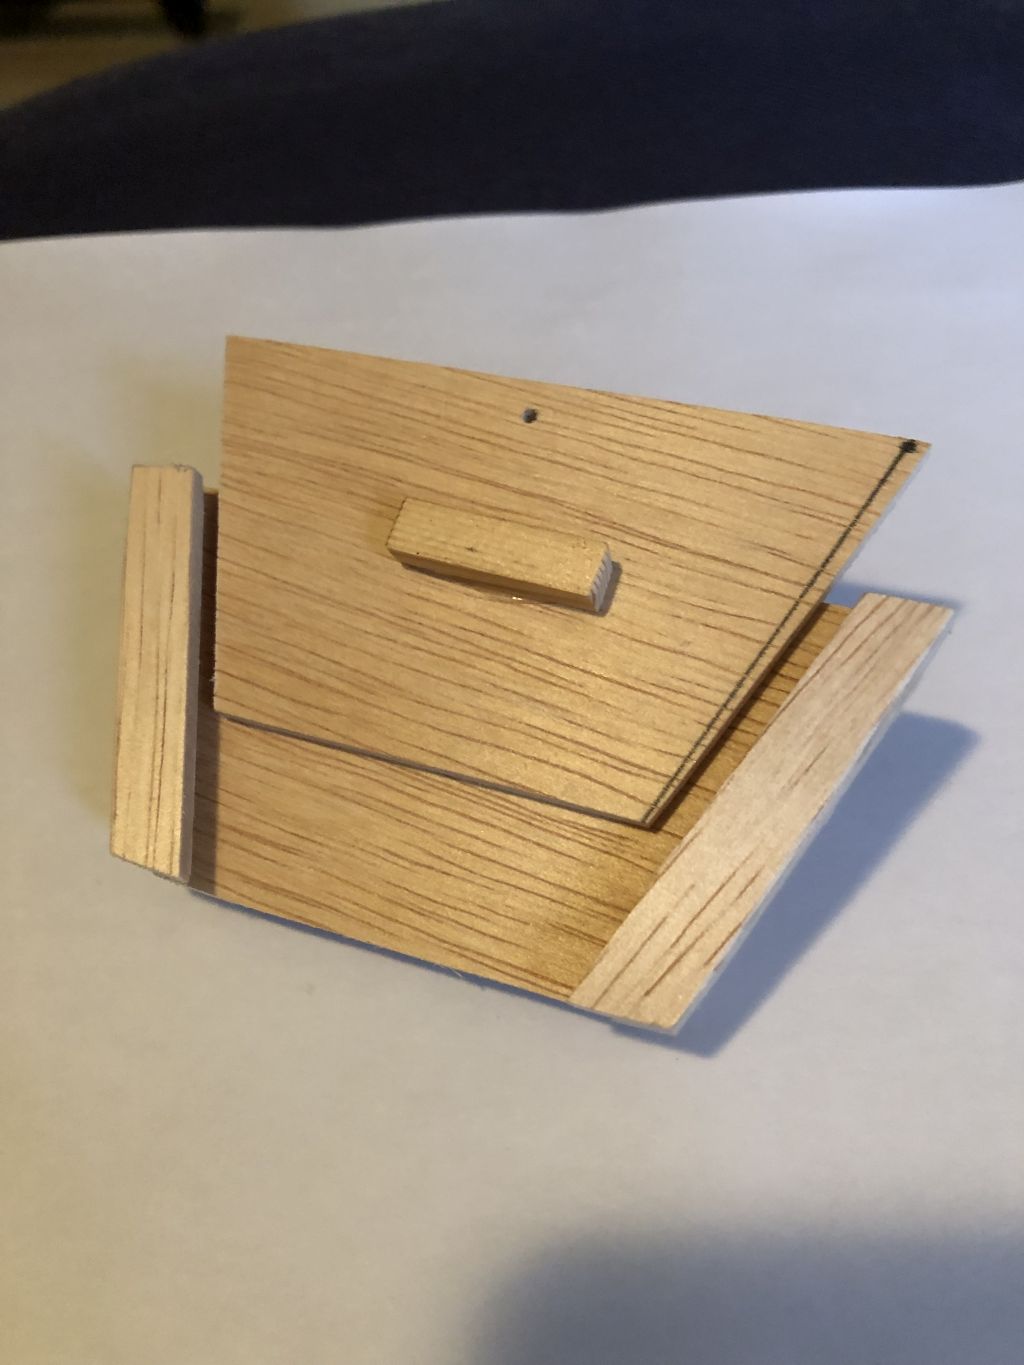 Wood prototype attachment